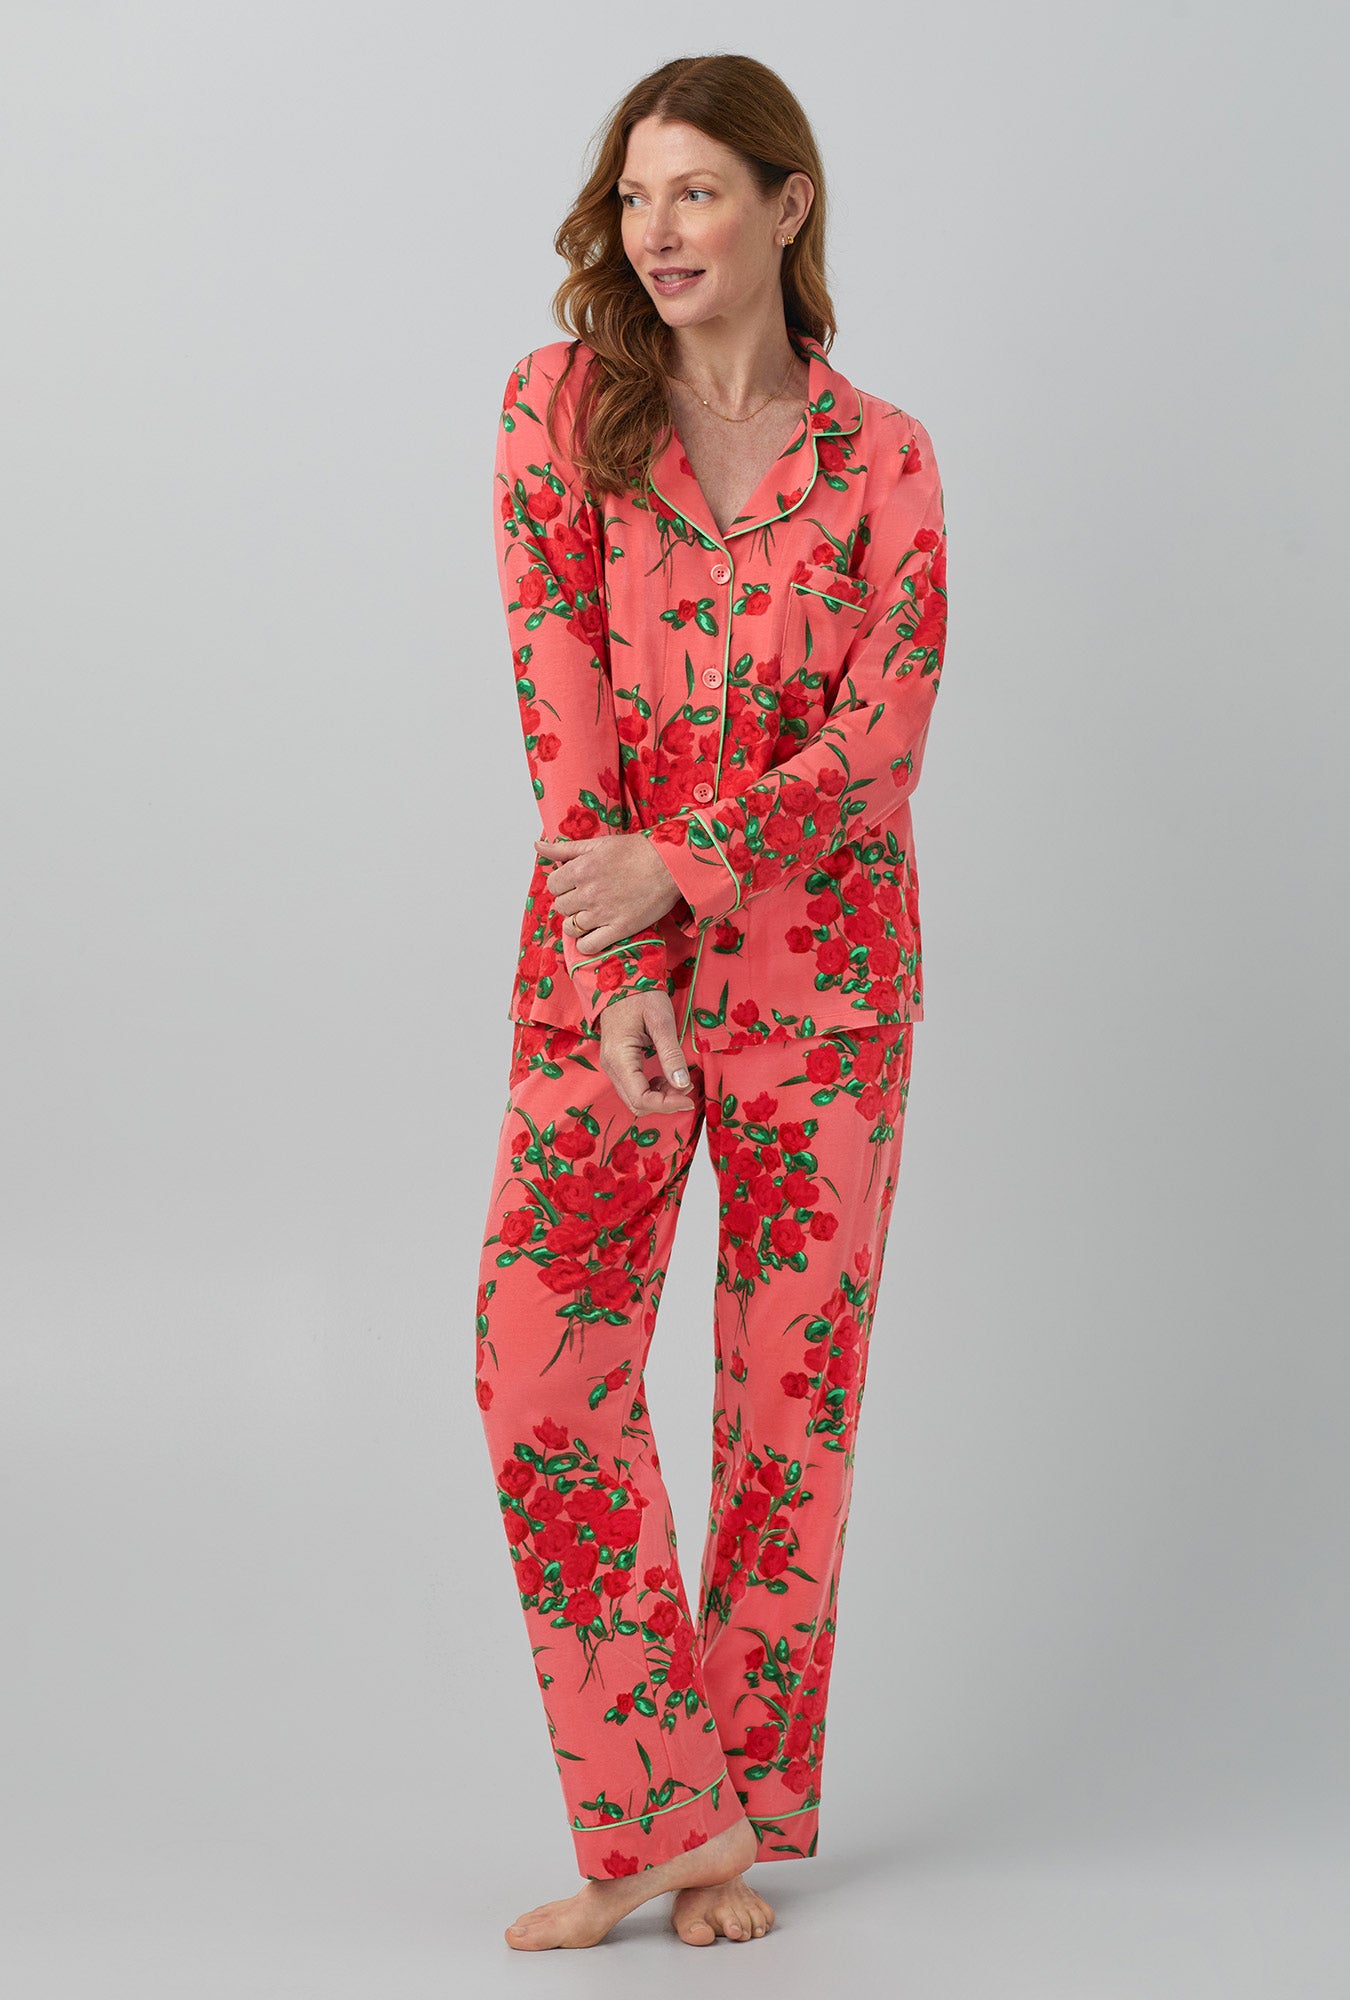 A lady wearing By The Dozen Long Sleeve Classic Stretch Jersey PJ Set